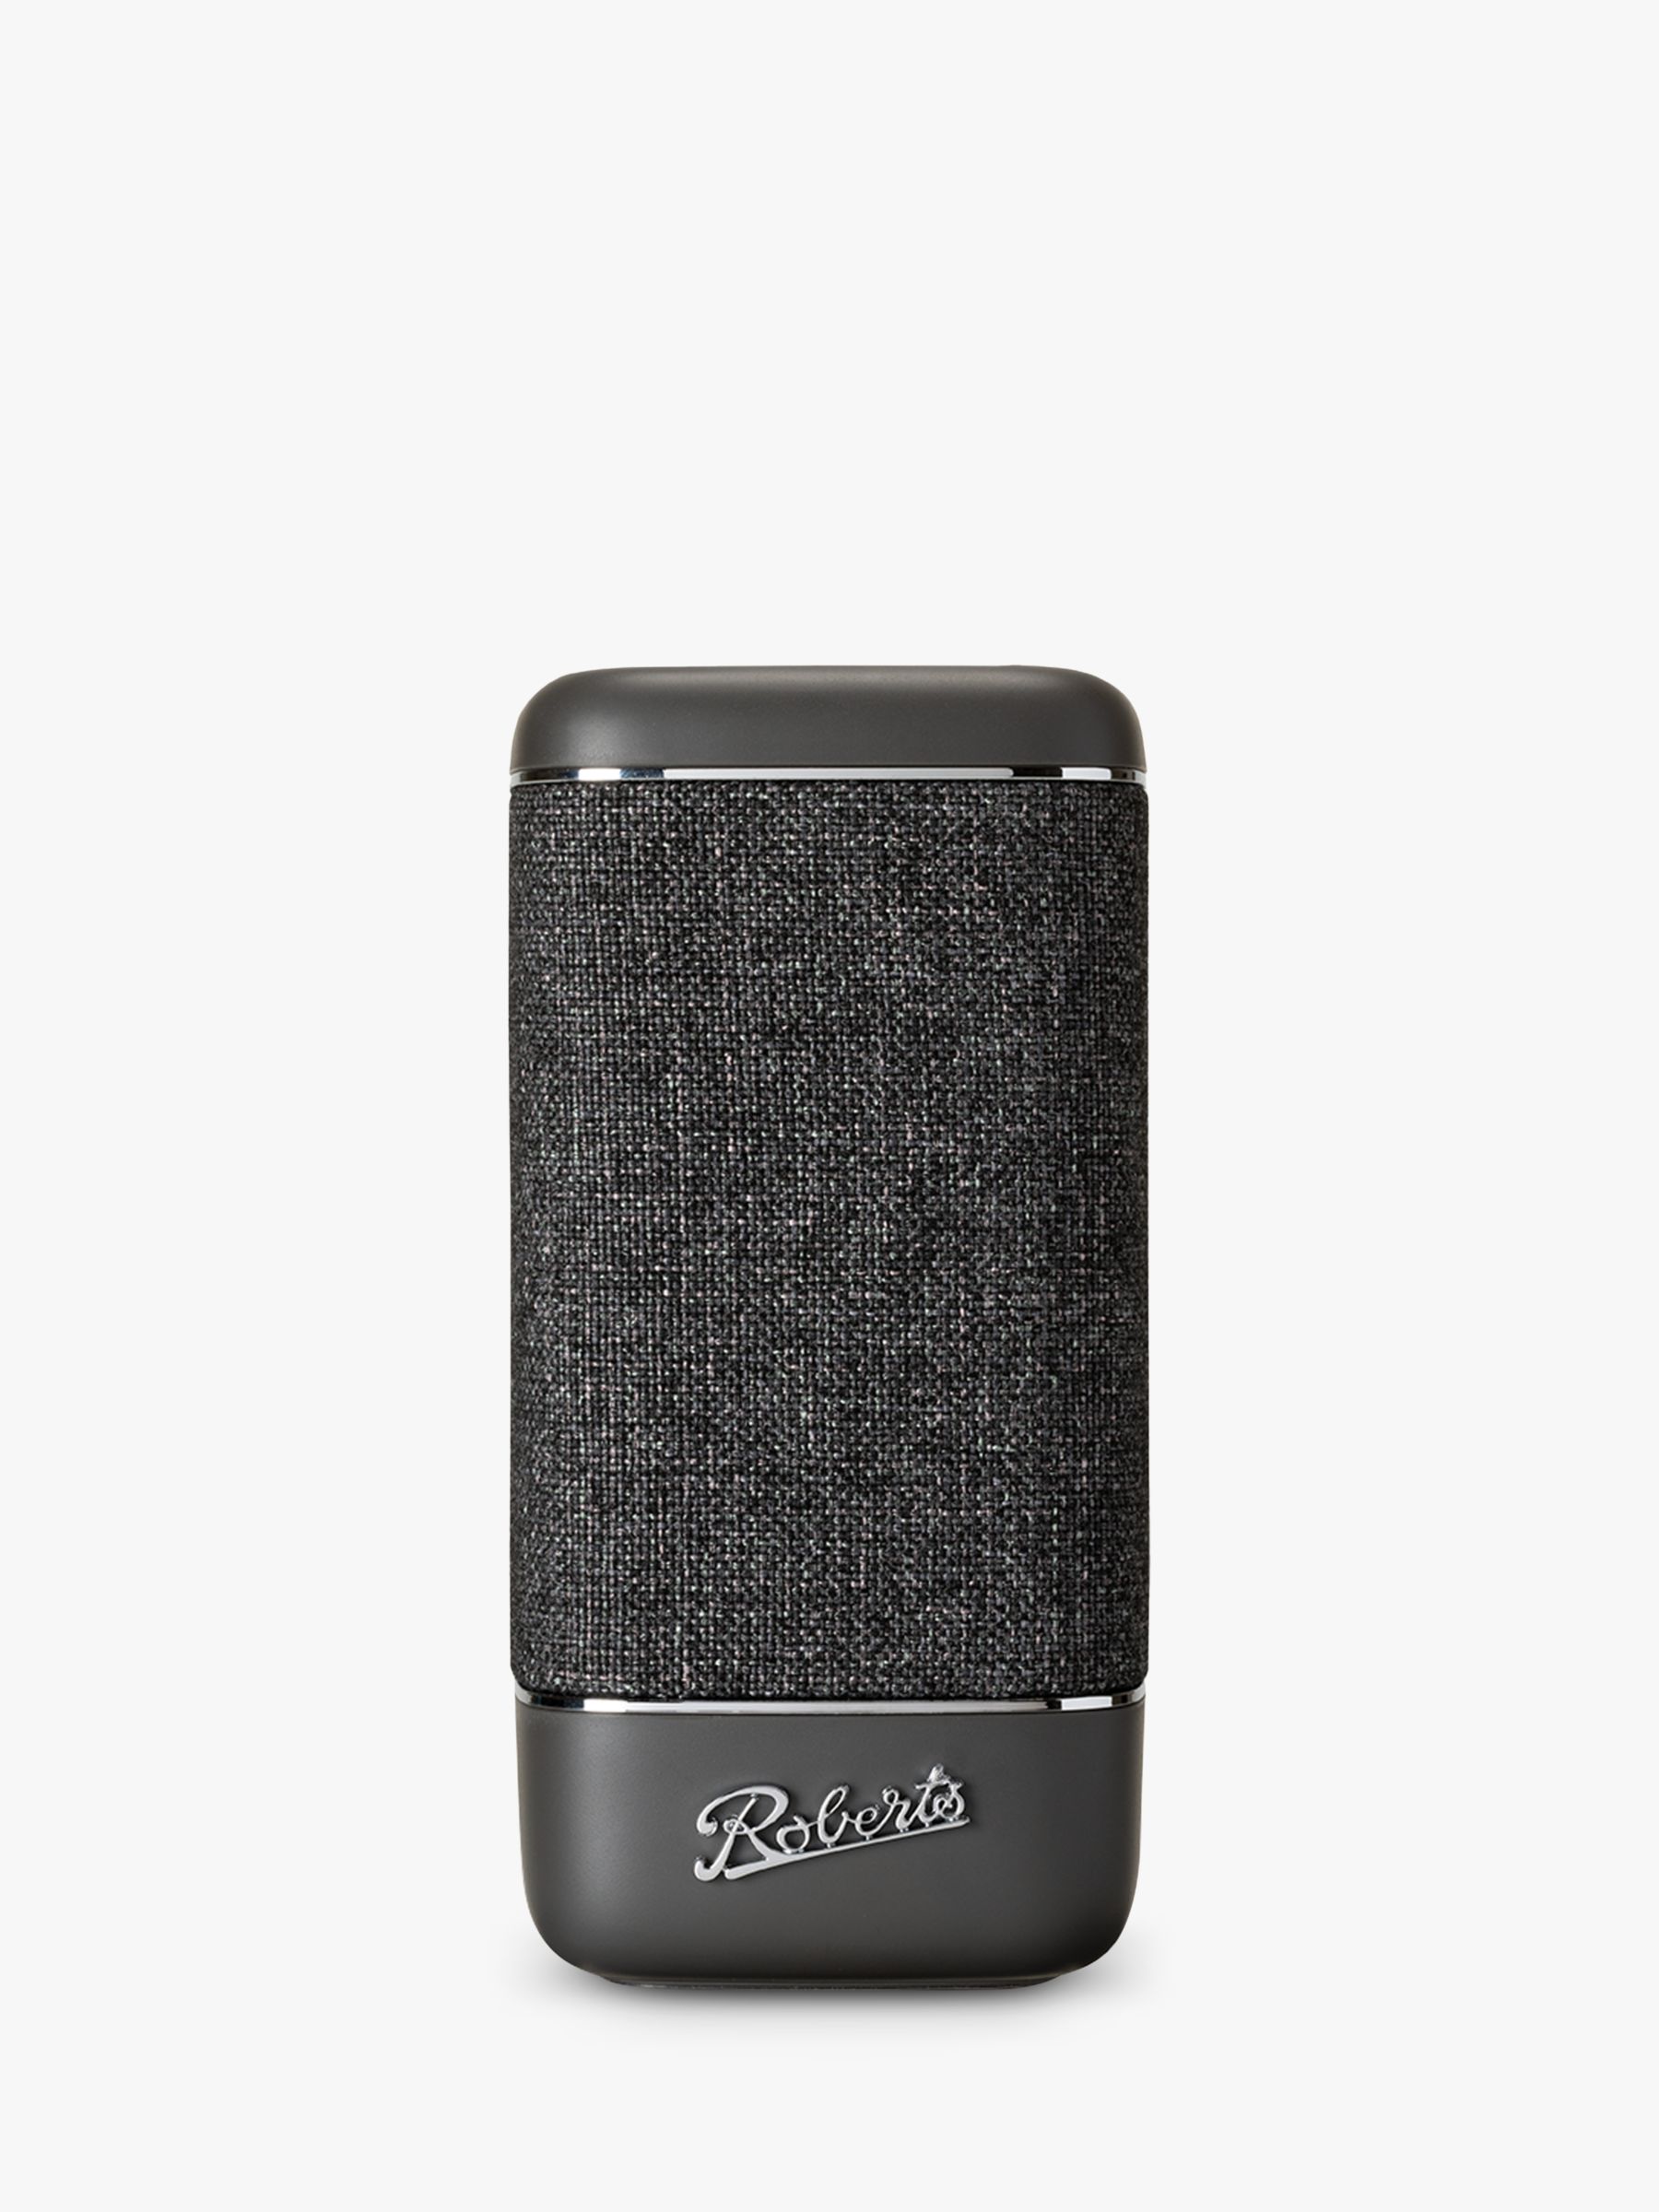 Roberts Beacon 320 Portable Bluetooth Speaker, Charcoal Grey